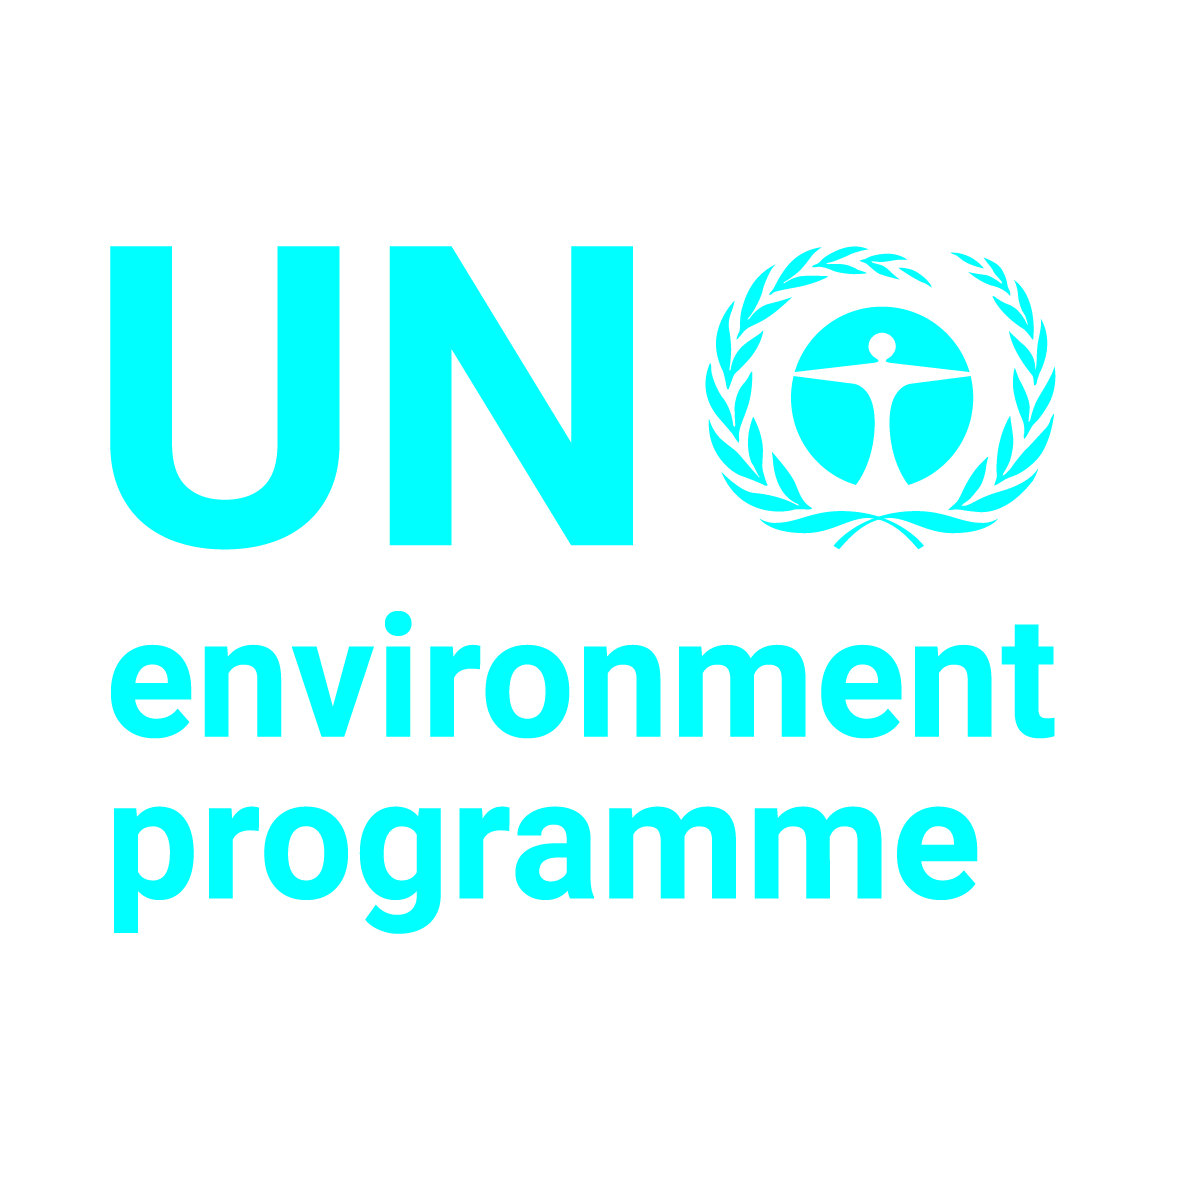 UNEP 2019 English